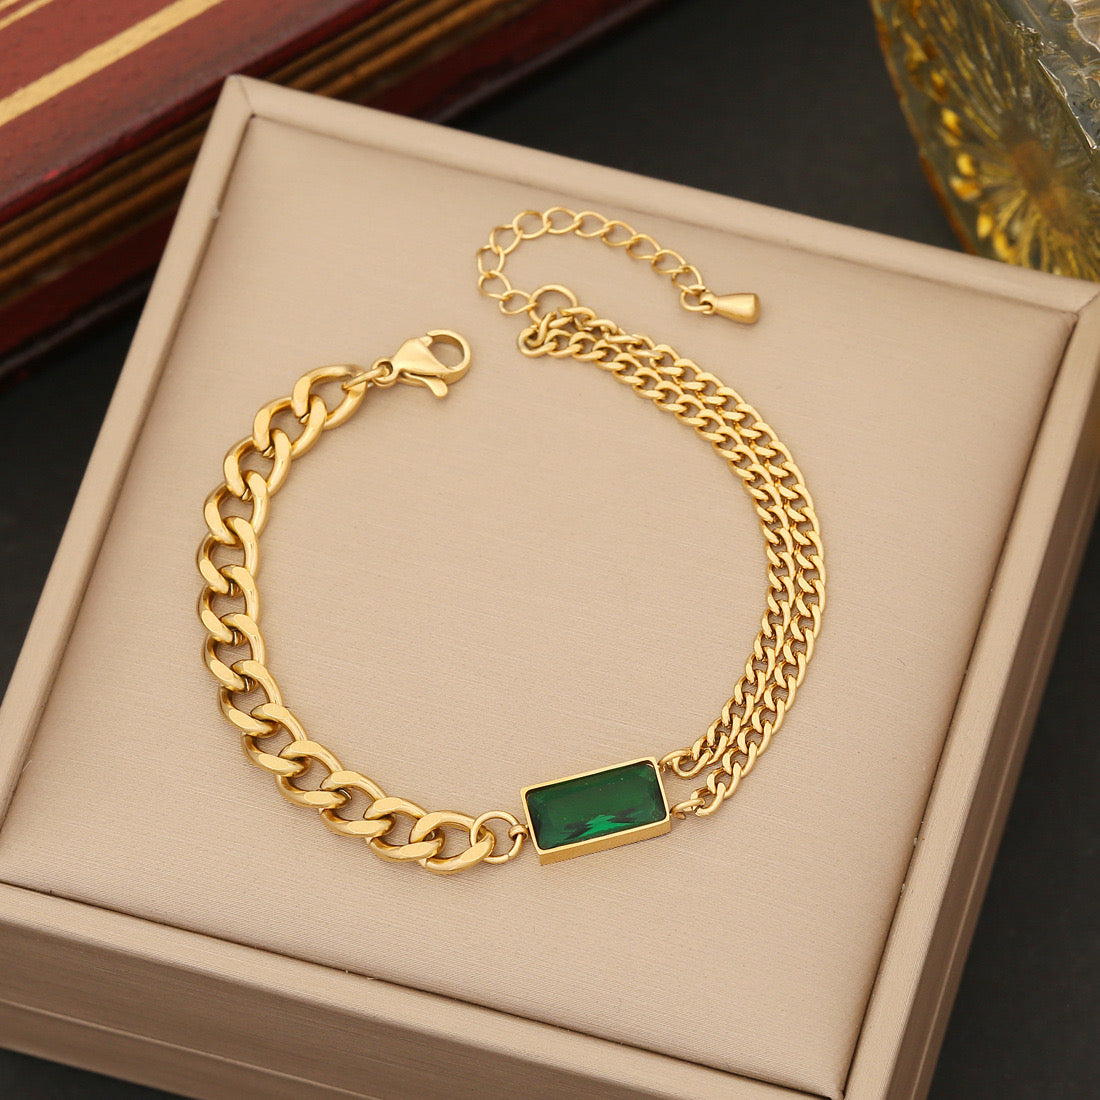 Nile Emerald Bracelet